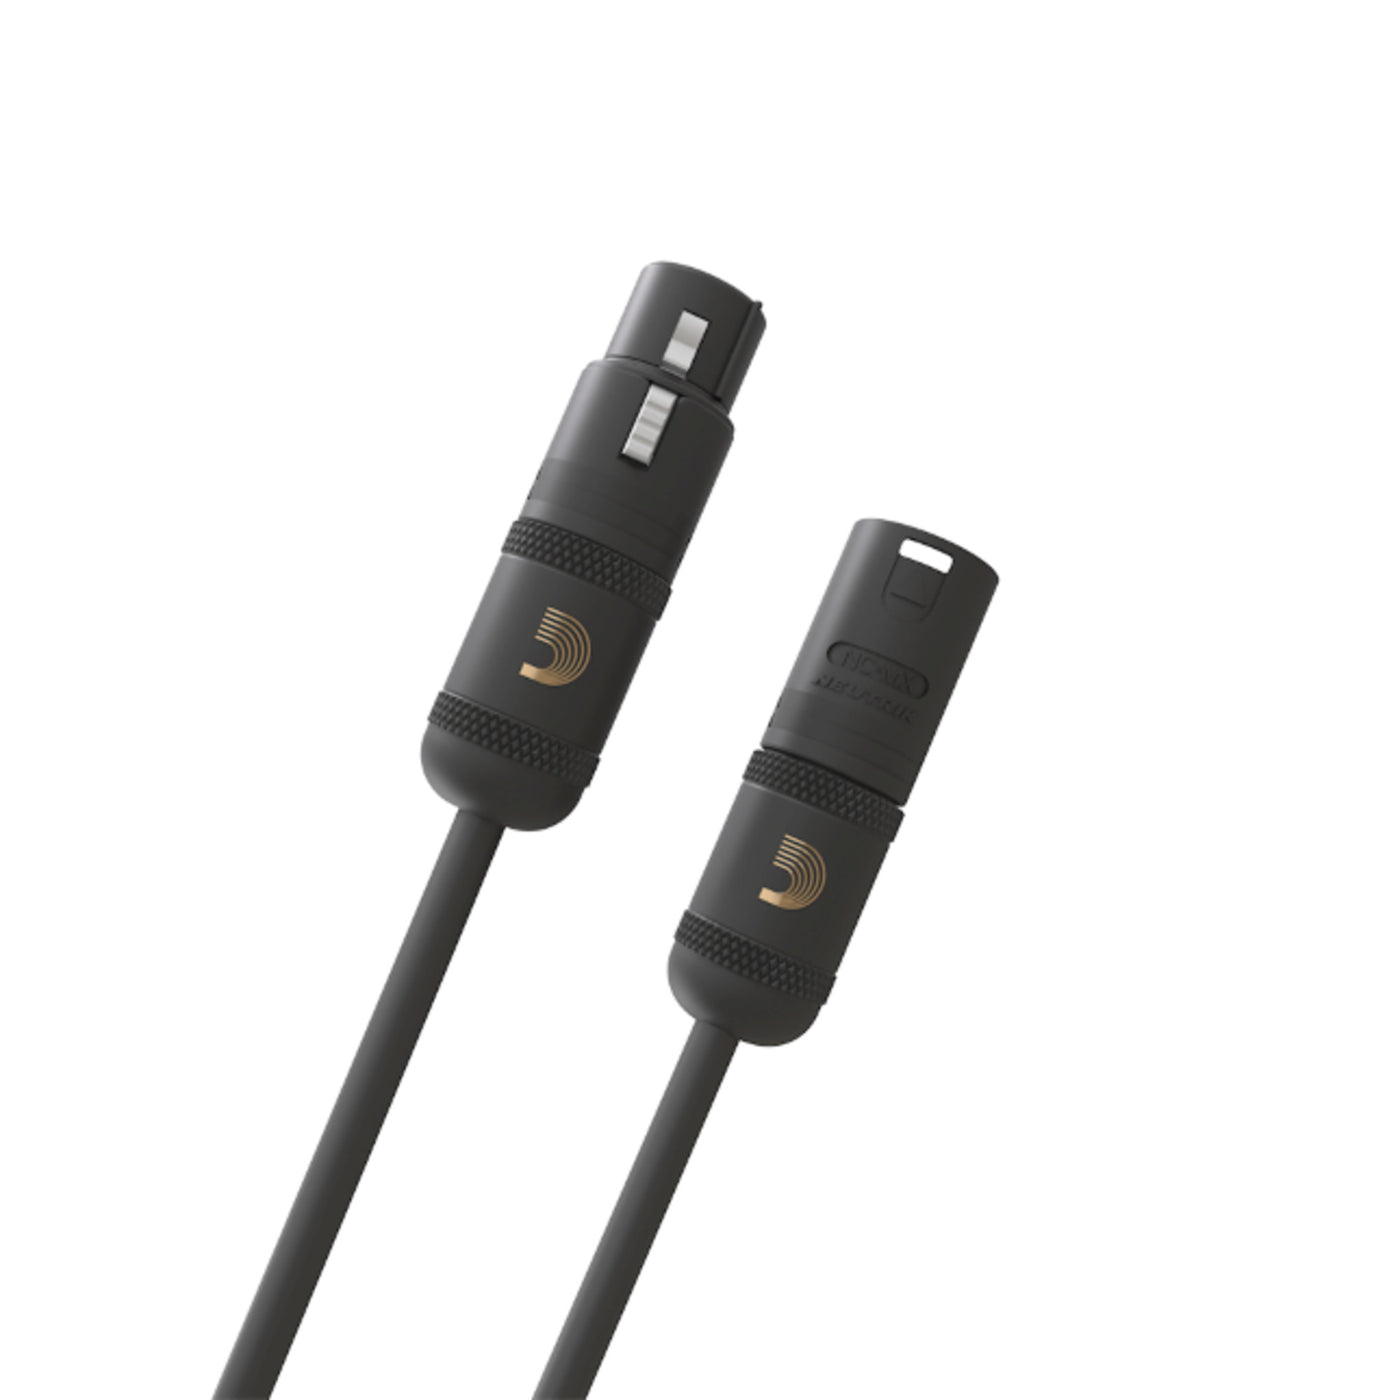 D'Addario American Stage Series Microphone Cable, XLR Male to XLR Female, 25 feet (PW-AMSM-25)